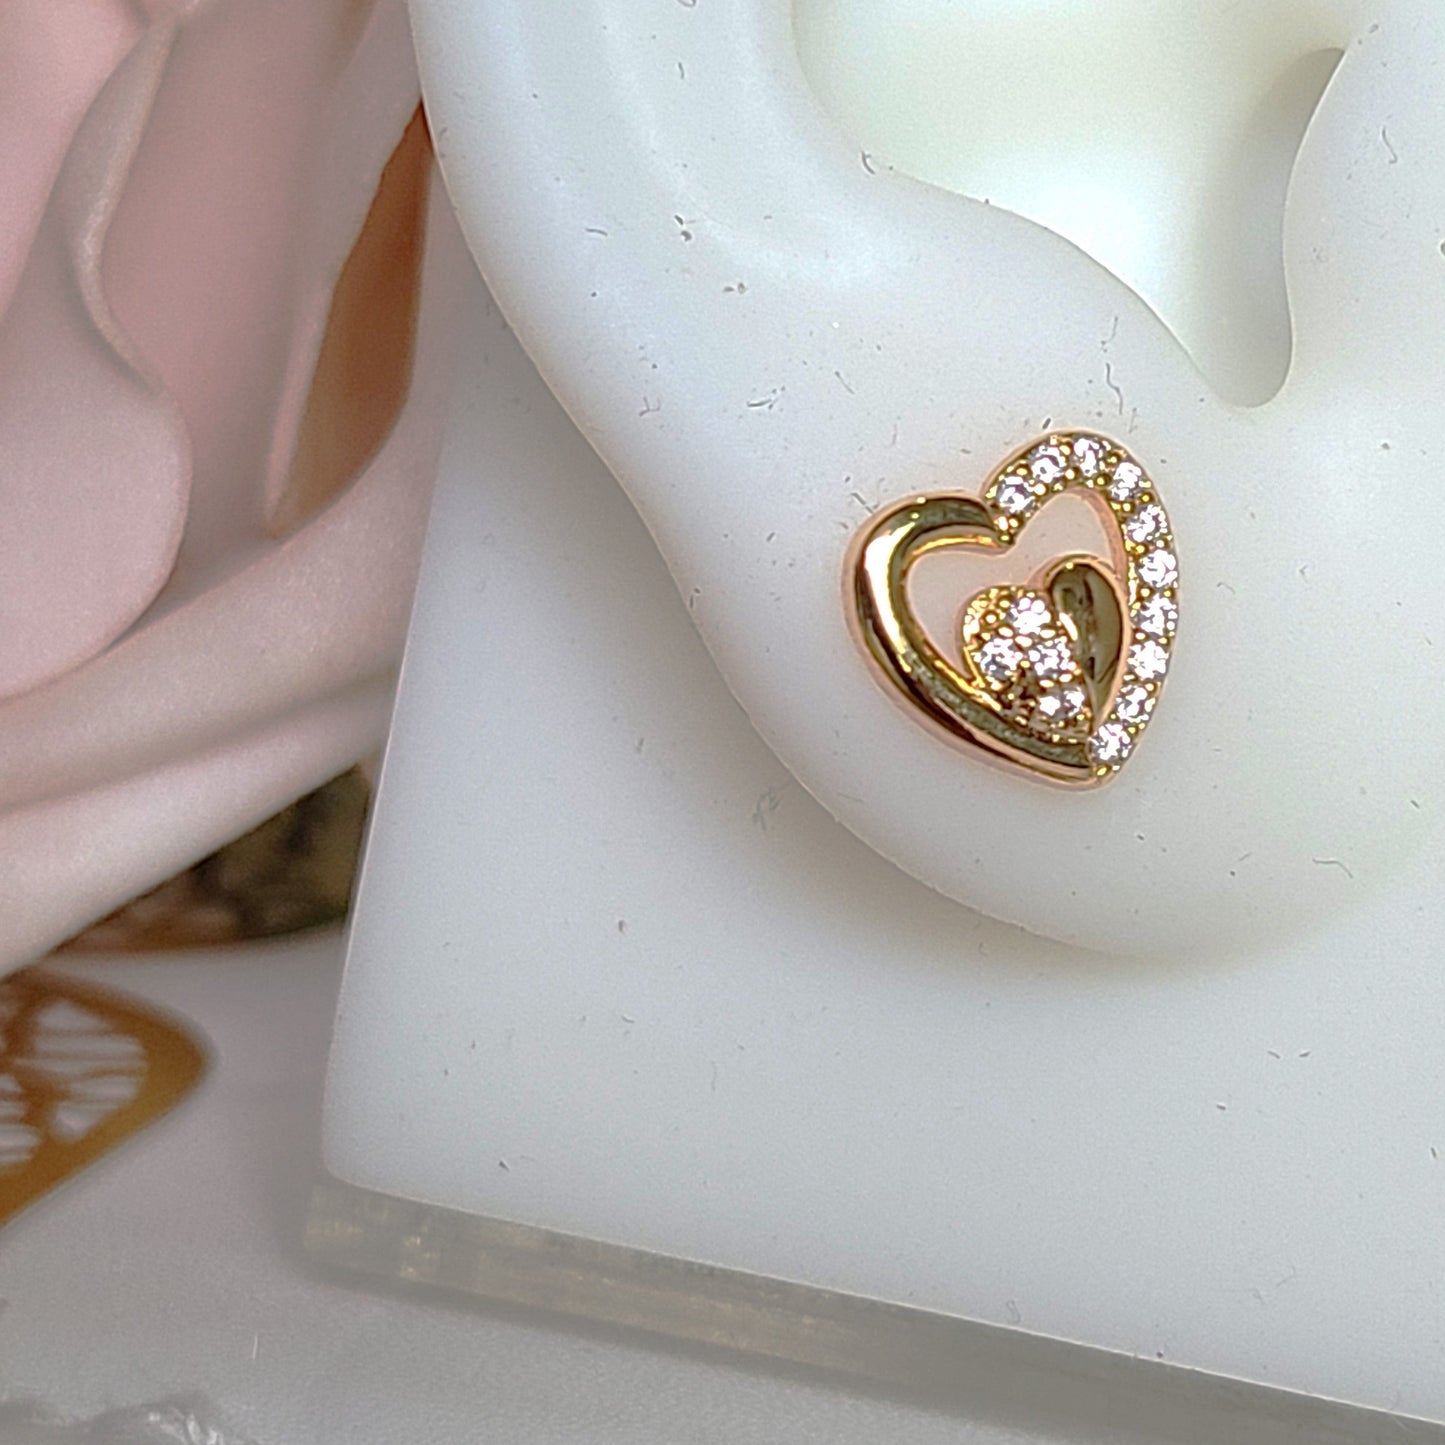 Alara Two-Hearts Earrings